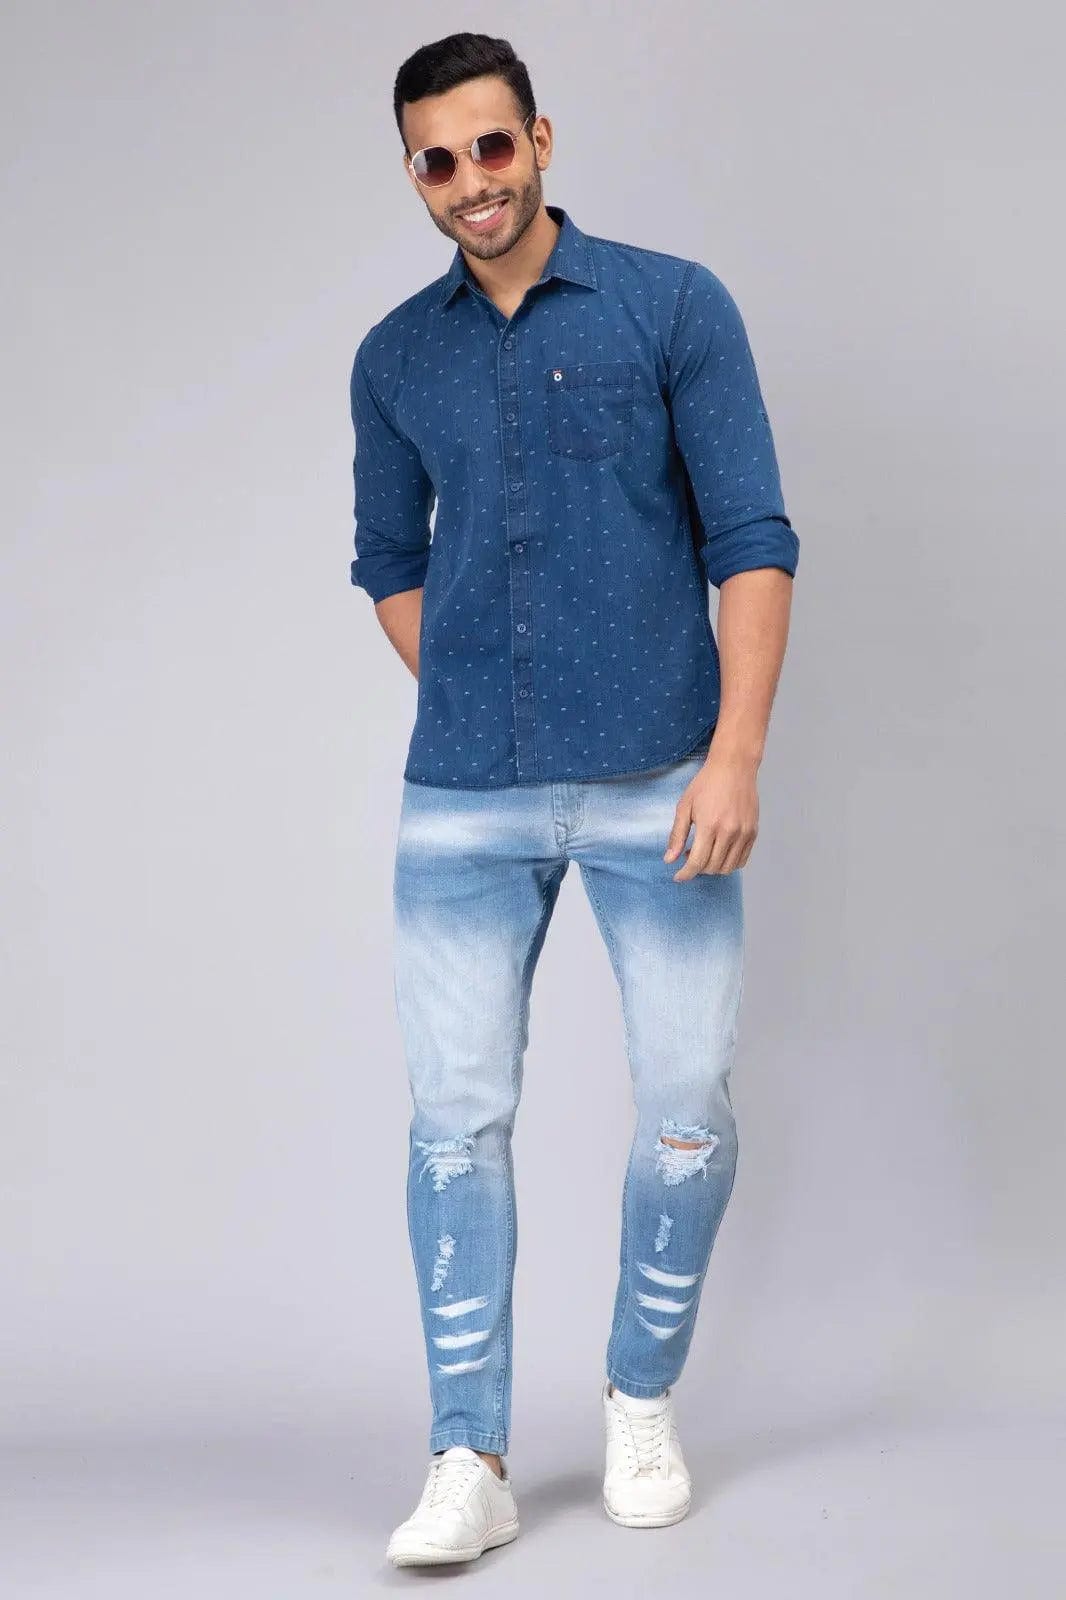 Discover more than 171 denim shirt with denim pants